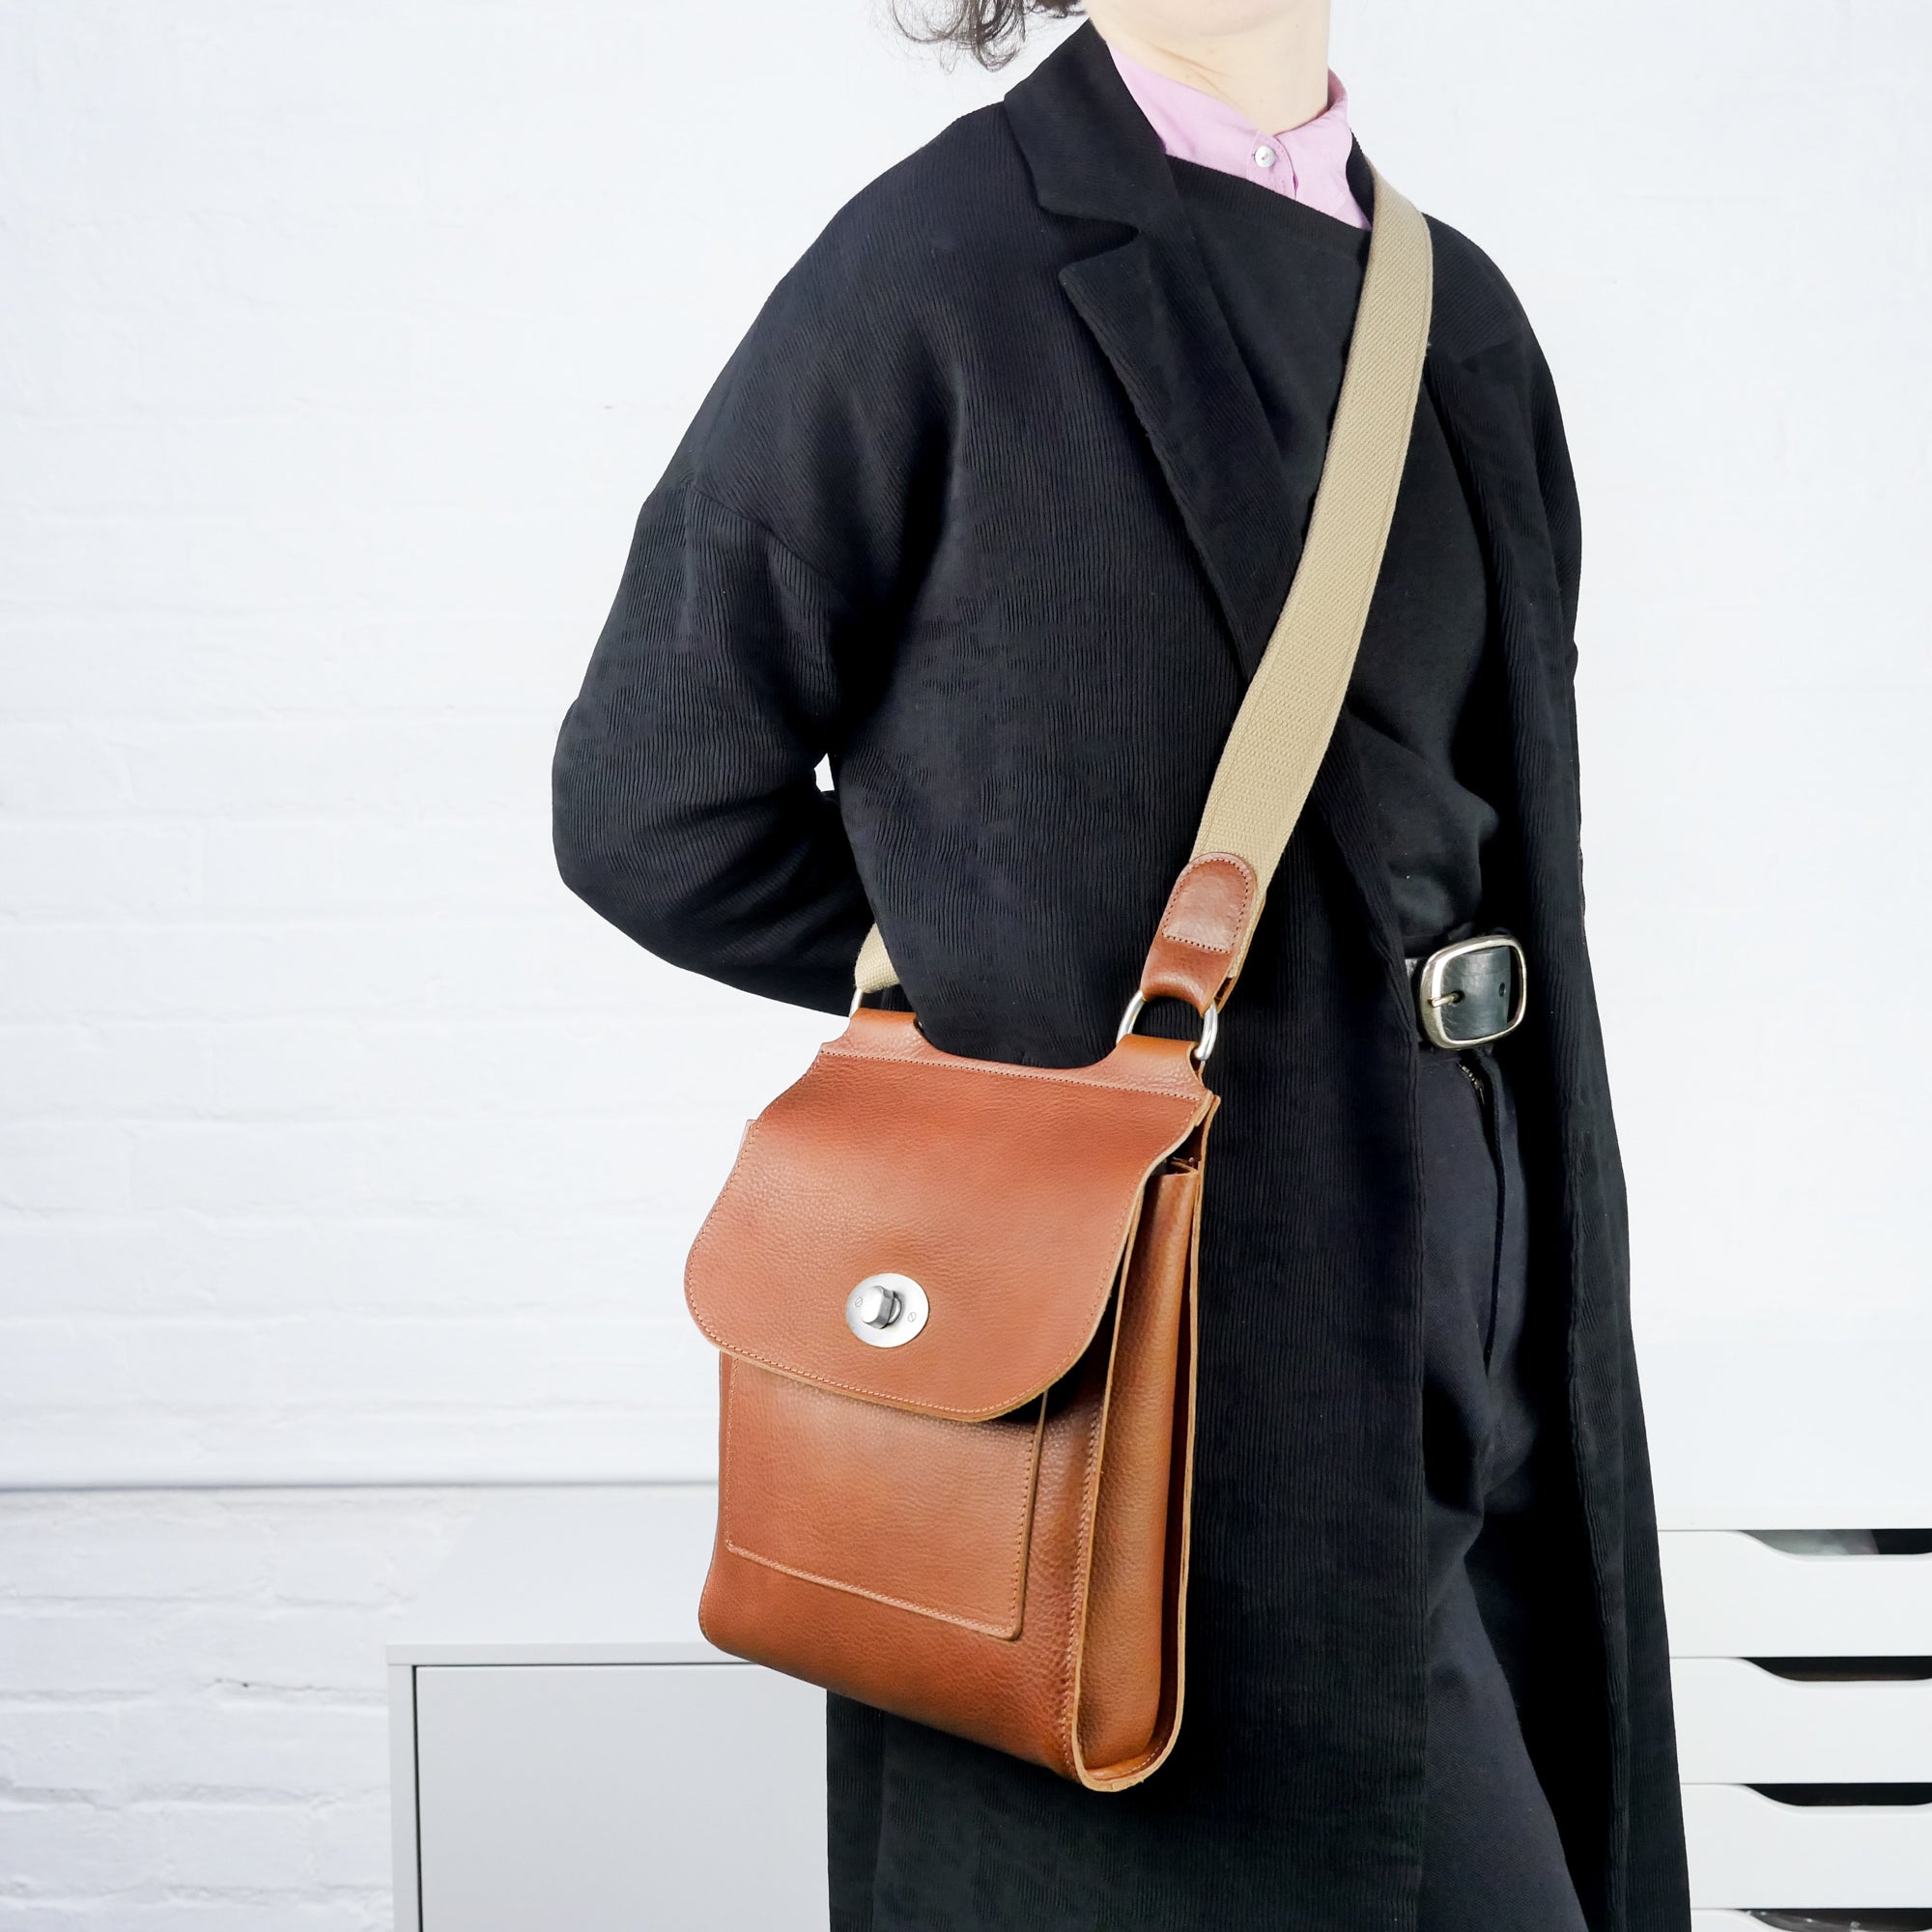 Tan Leather Turnlock Shoulder Bag